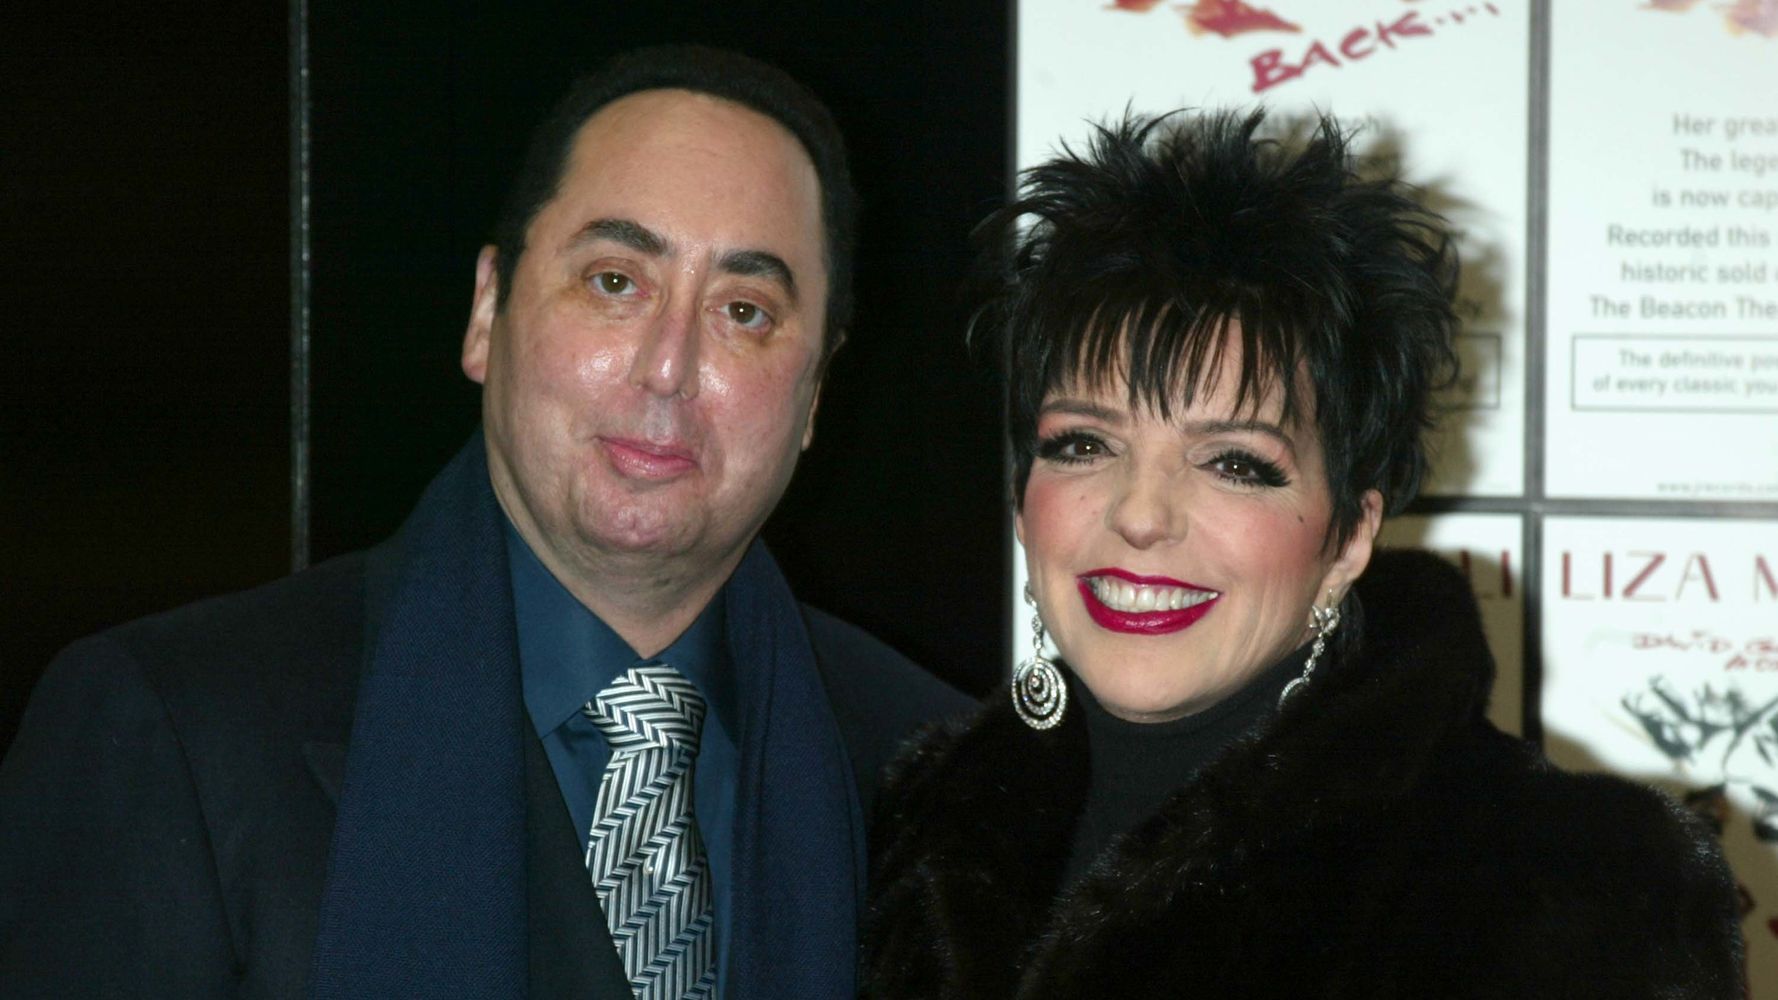 David Gest Music Producer And Liza Minnelli S Ex Husband Found Dead